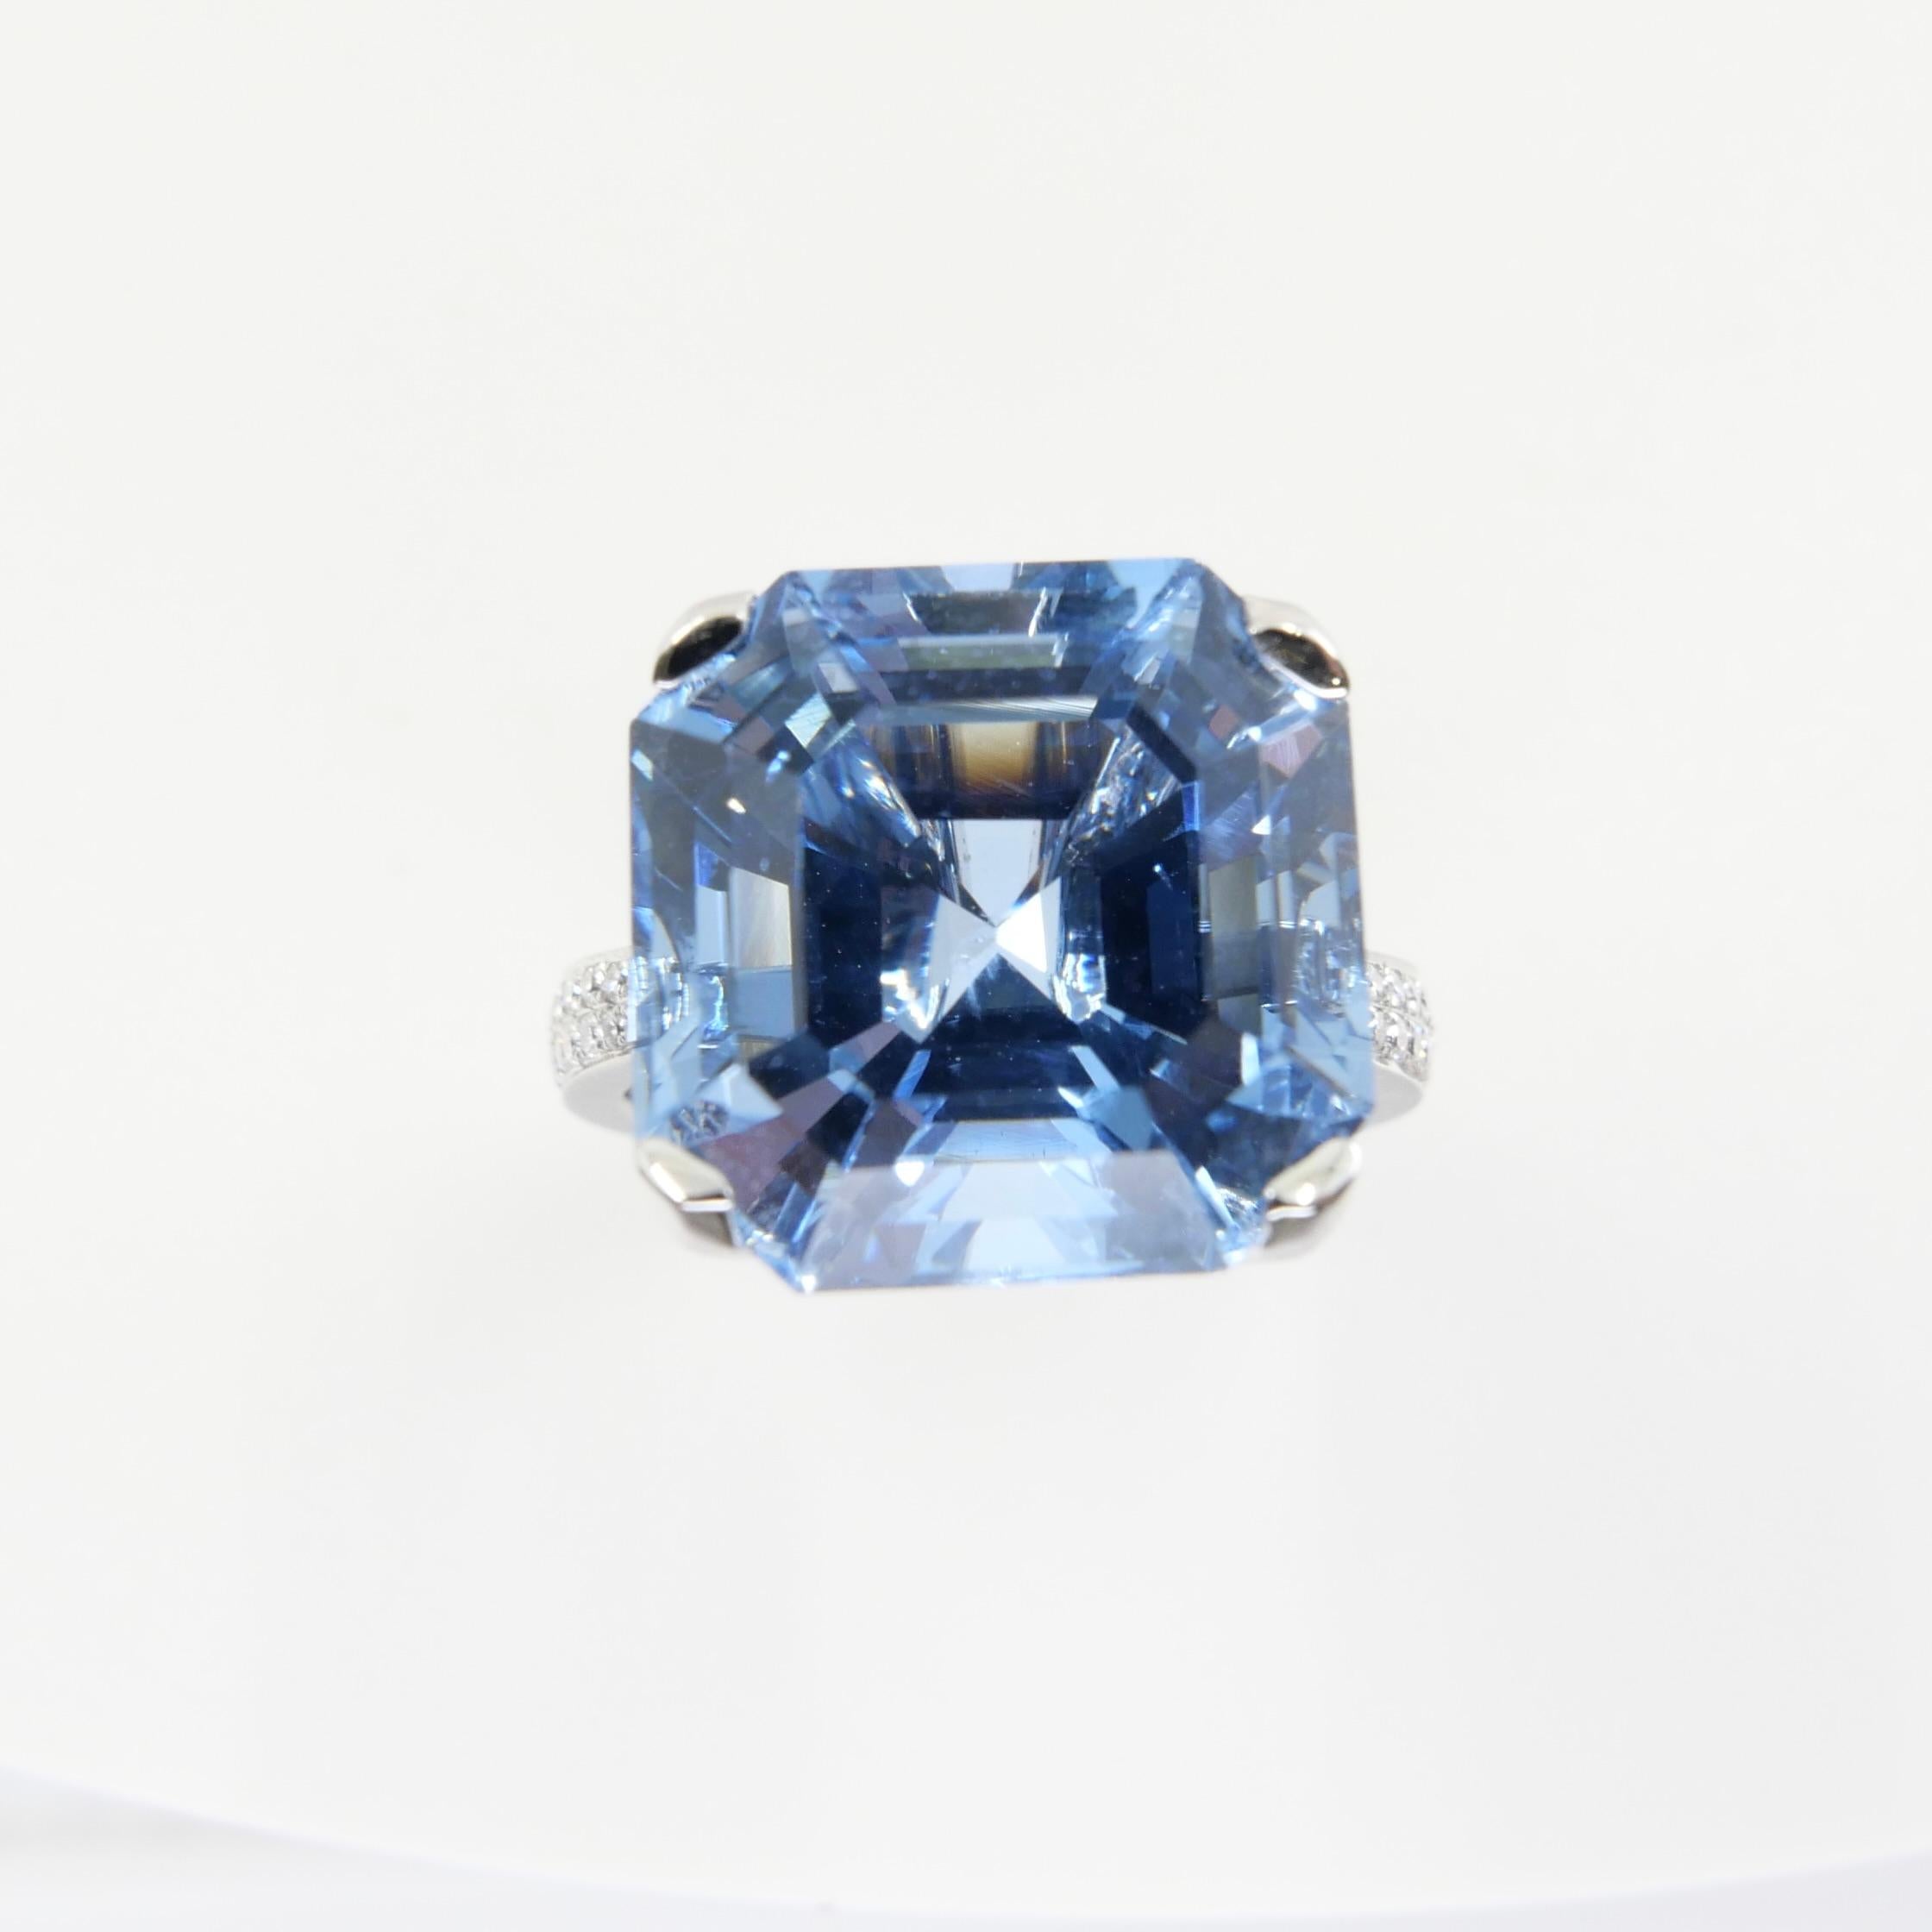 Certified 11.23 Cts Asscher Cut Aquamarine Diamond Ring, True Santa Maria Color 13